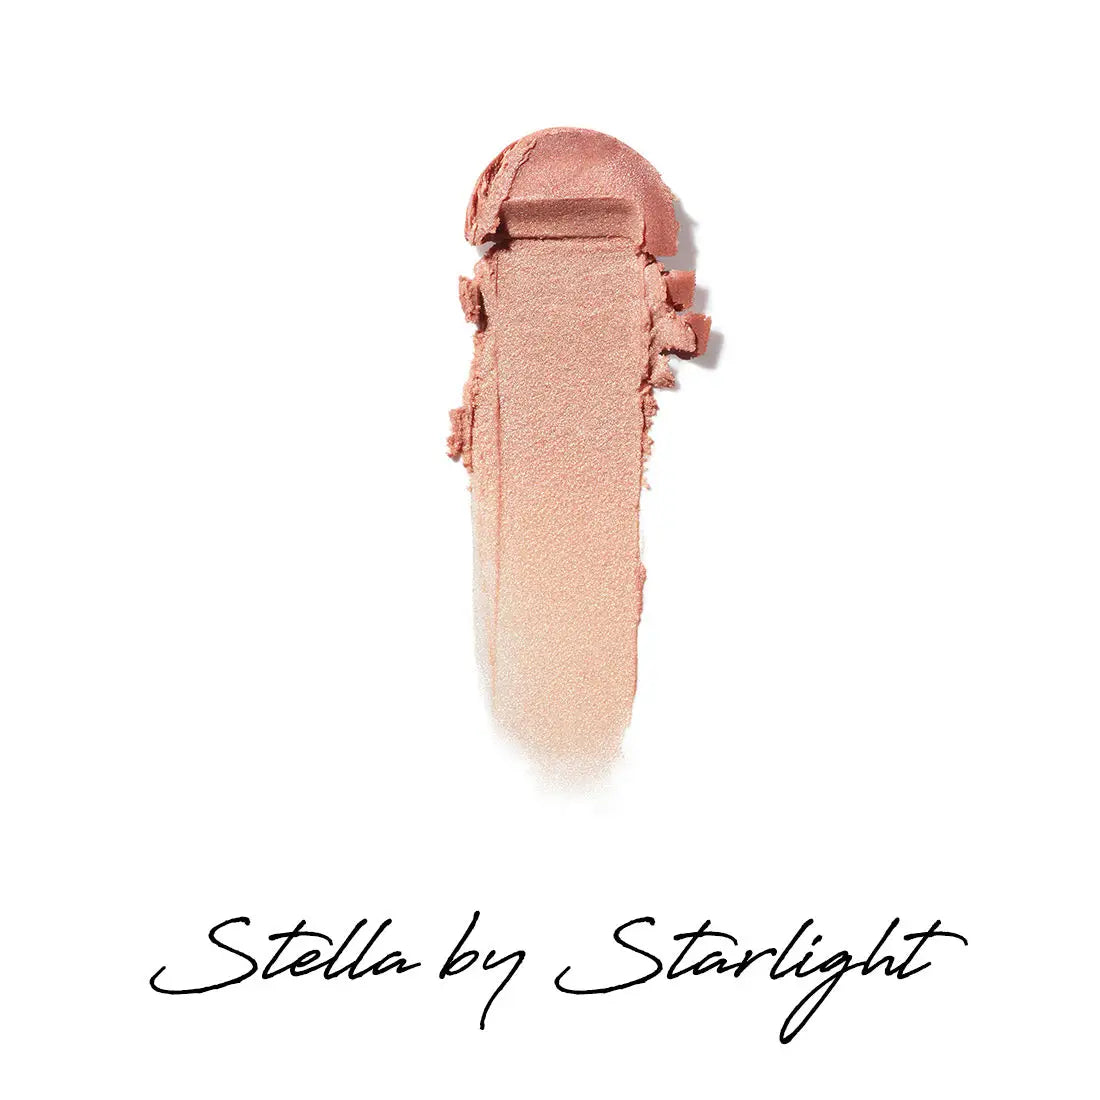 Ilia Beauty Illuminator 4.5g - Stella by Starlight 5g Free 